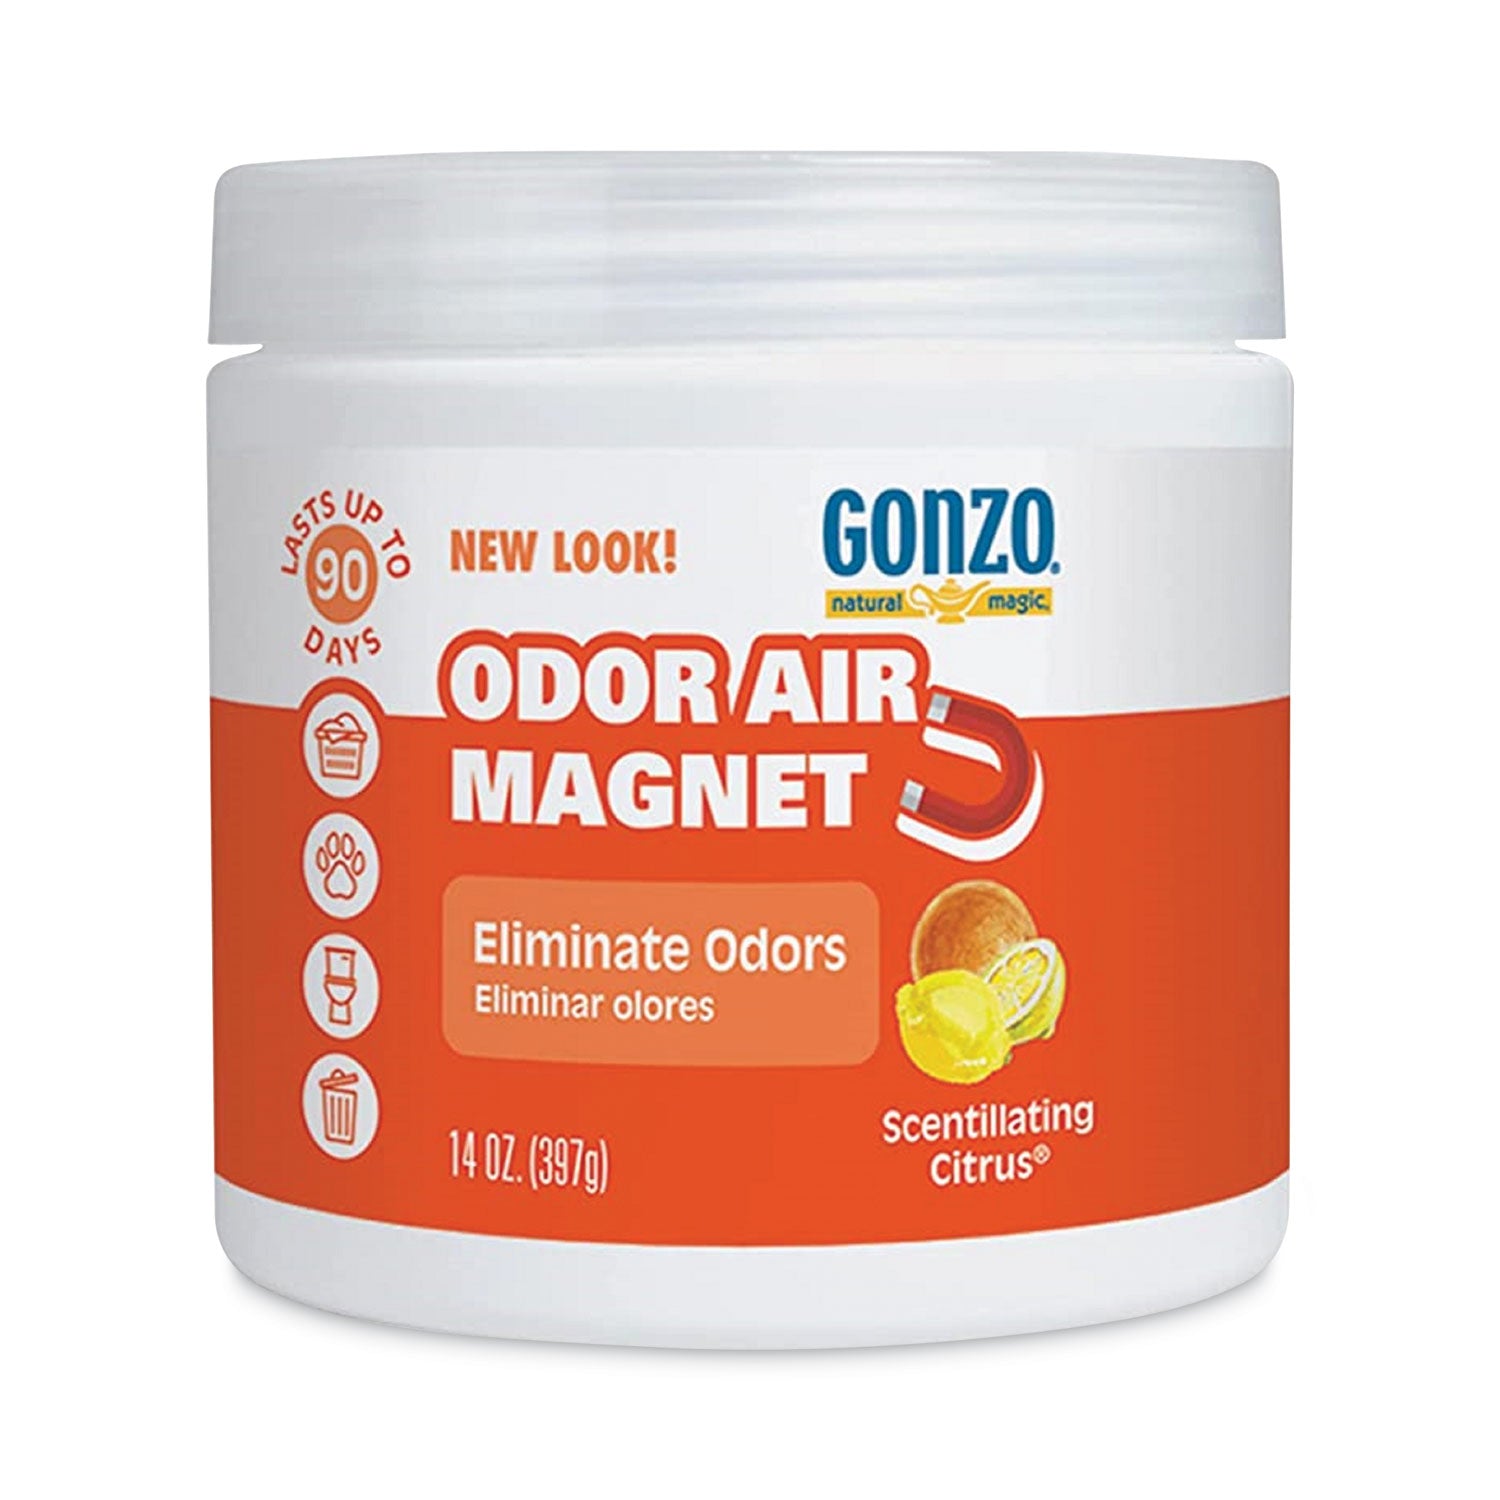 Odor Absorbing Gel, Scentillating Citrus, 14 oz Jar - 